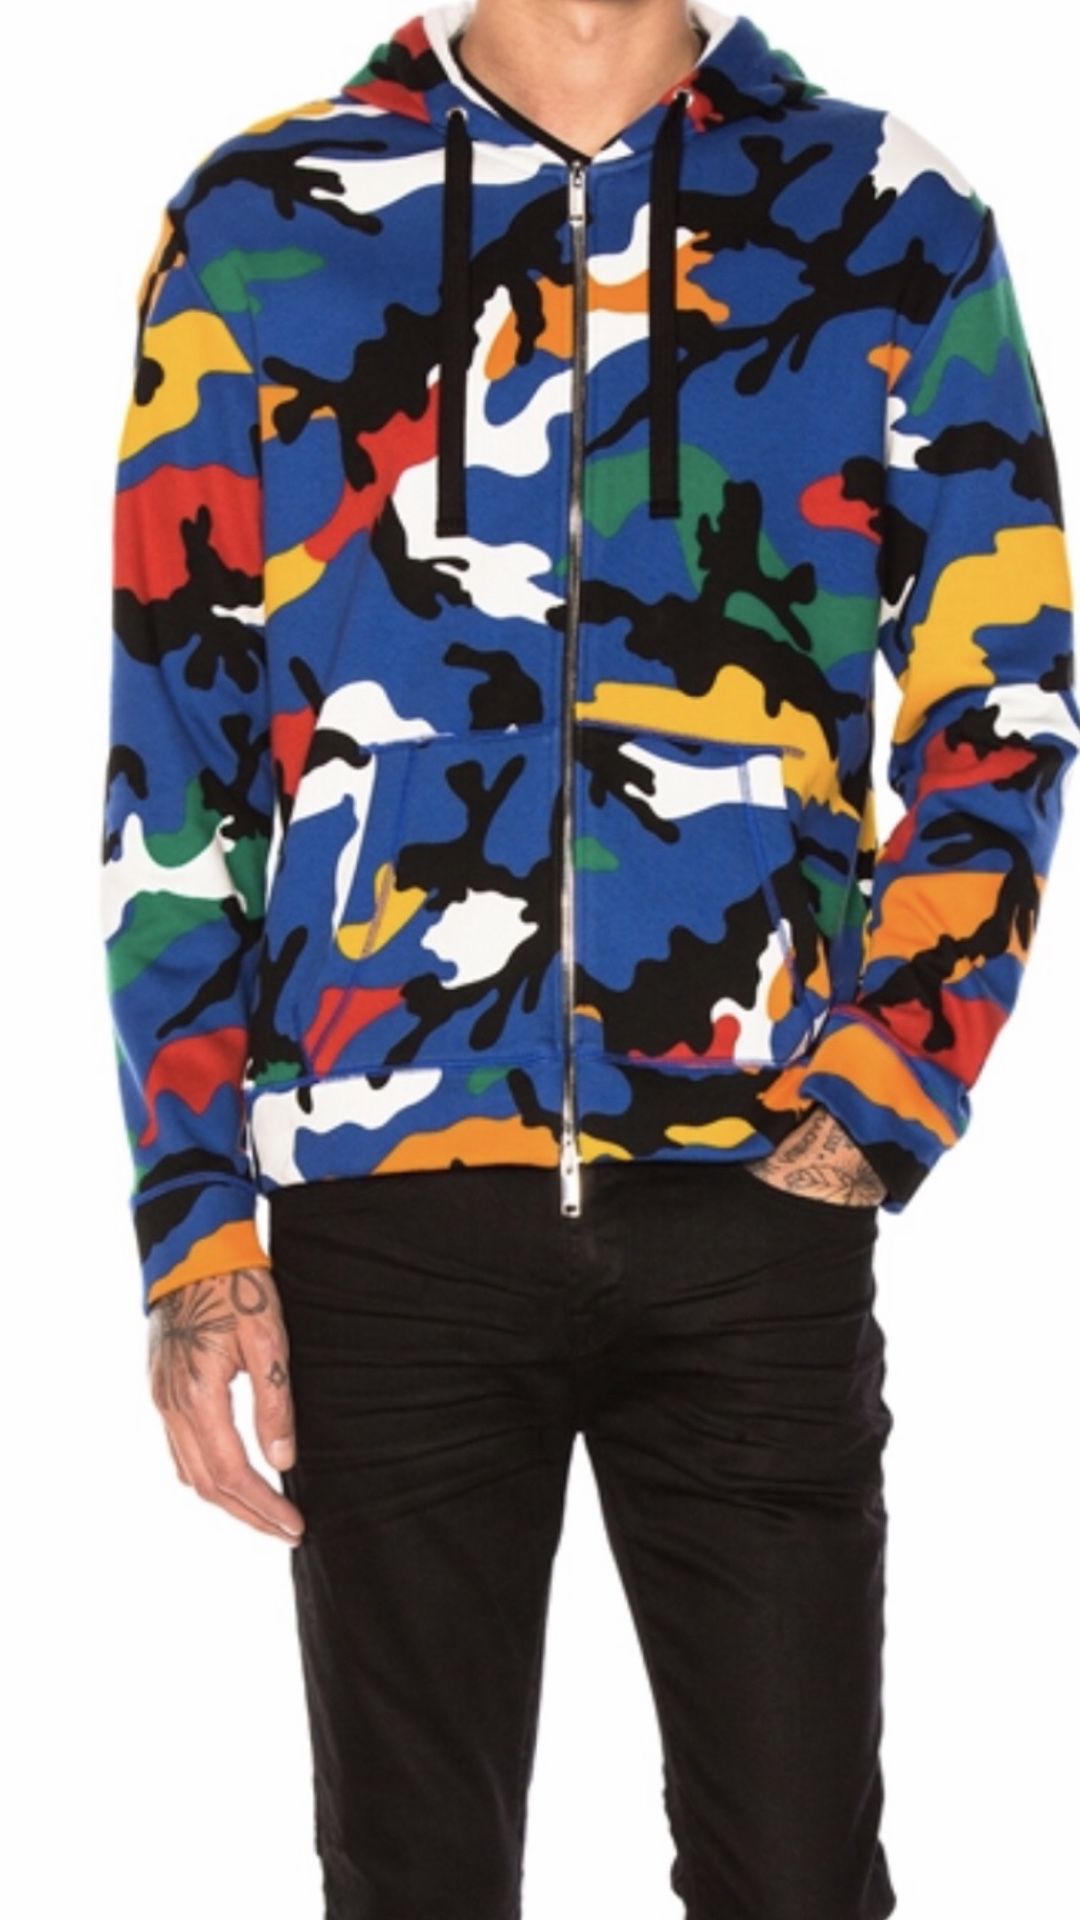 NWT Valentino Garavini Multi Color Camo Sweater Jacket Hoodie $1350 Bape